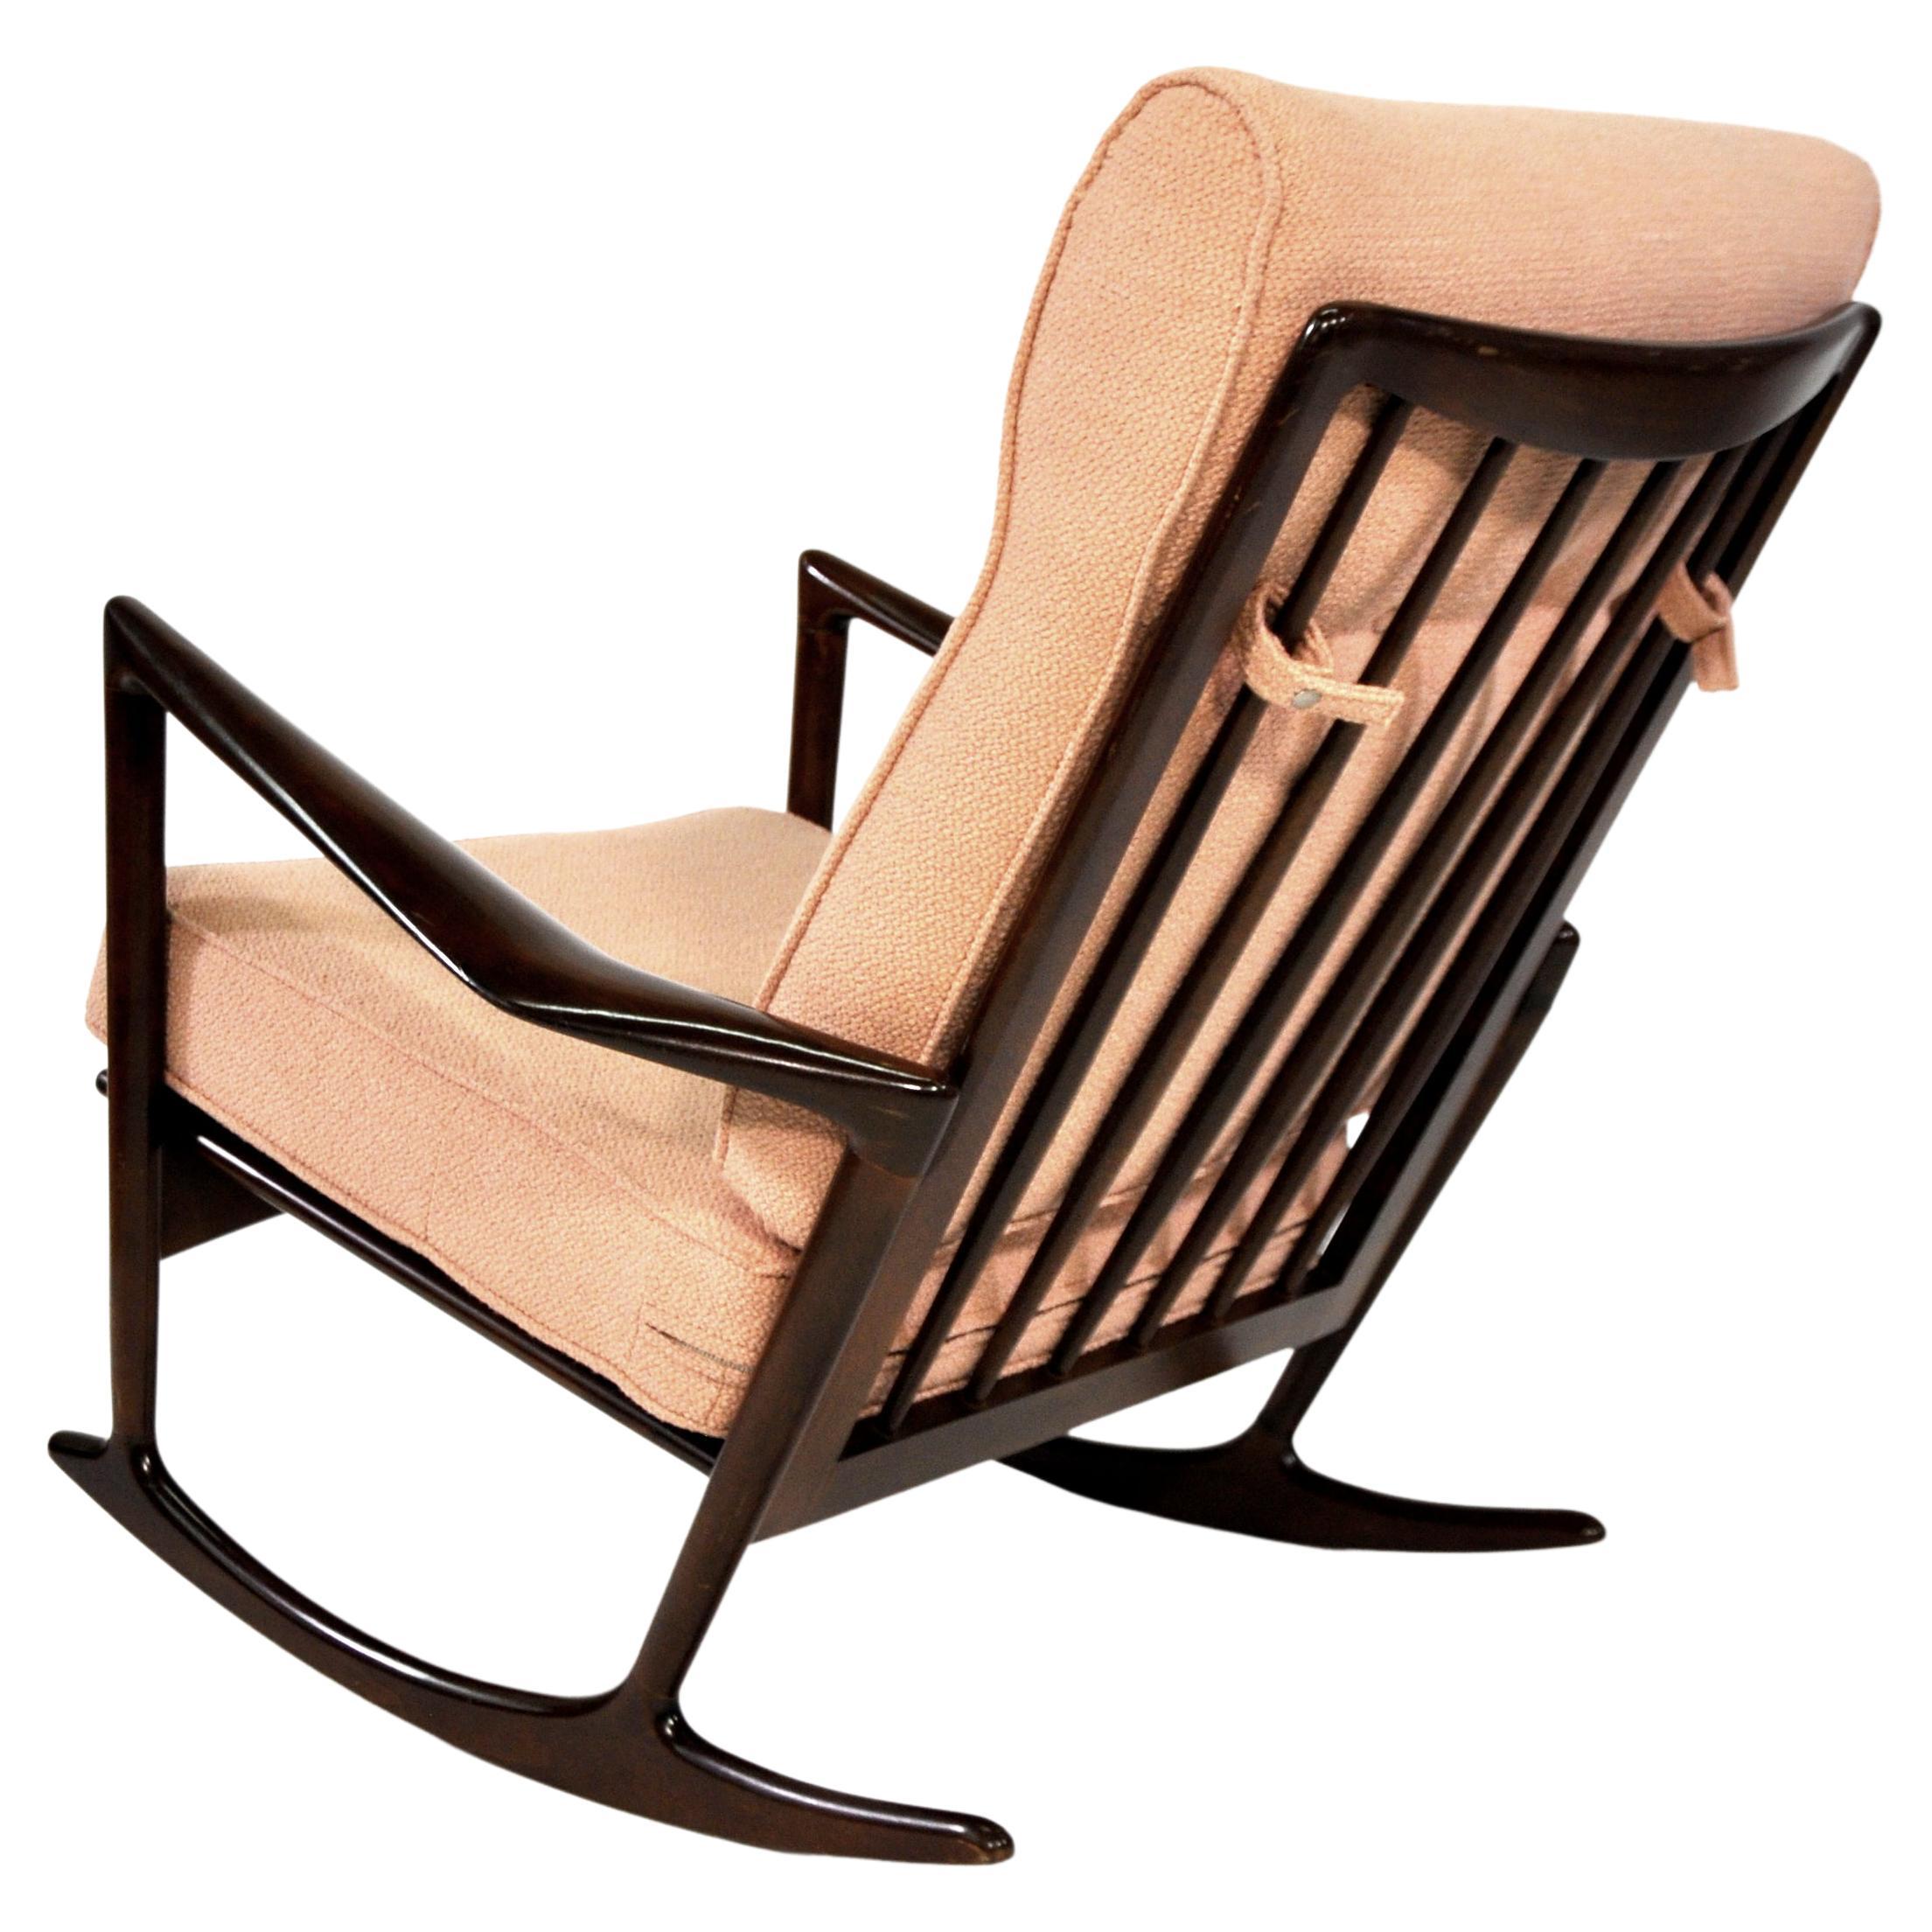 Ib Kofod-Larsen Sculptural Rocking Chair for Selig, Denmark, 1960s For Sale 2